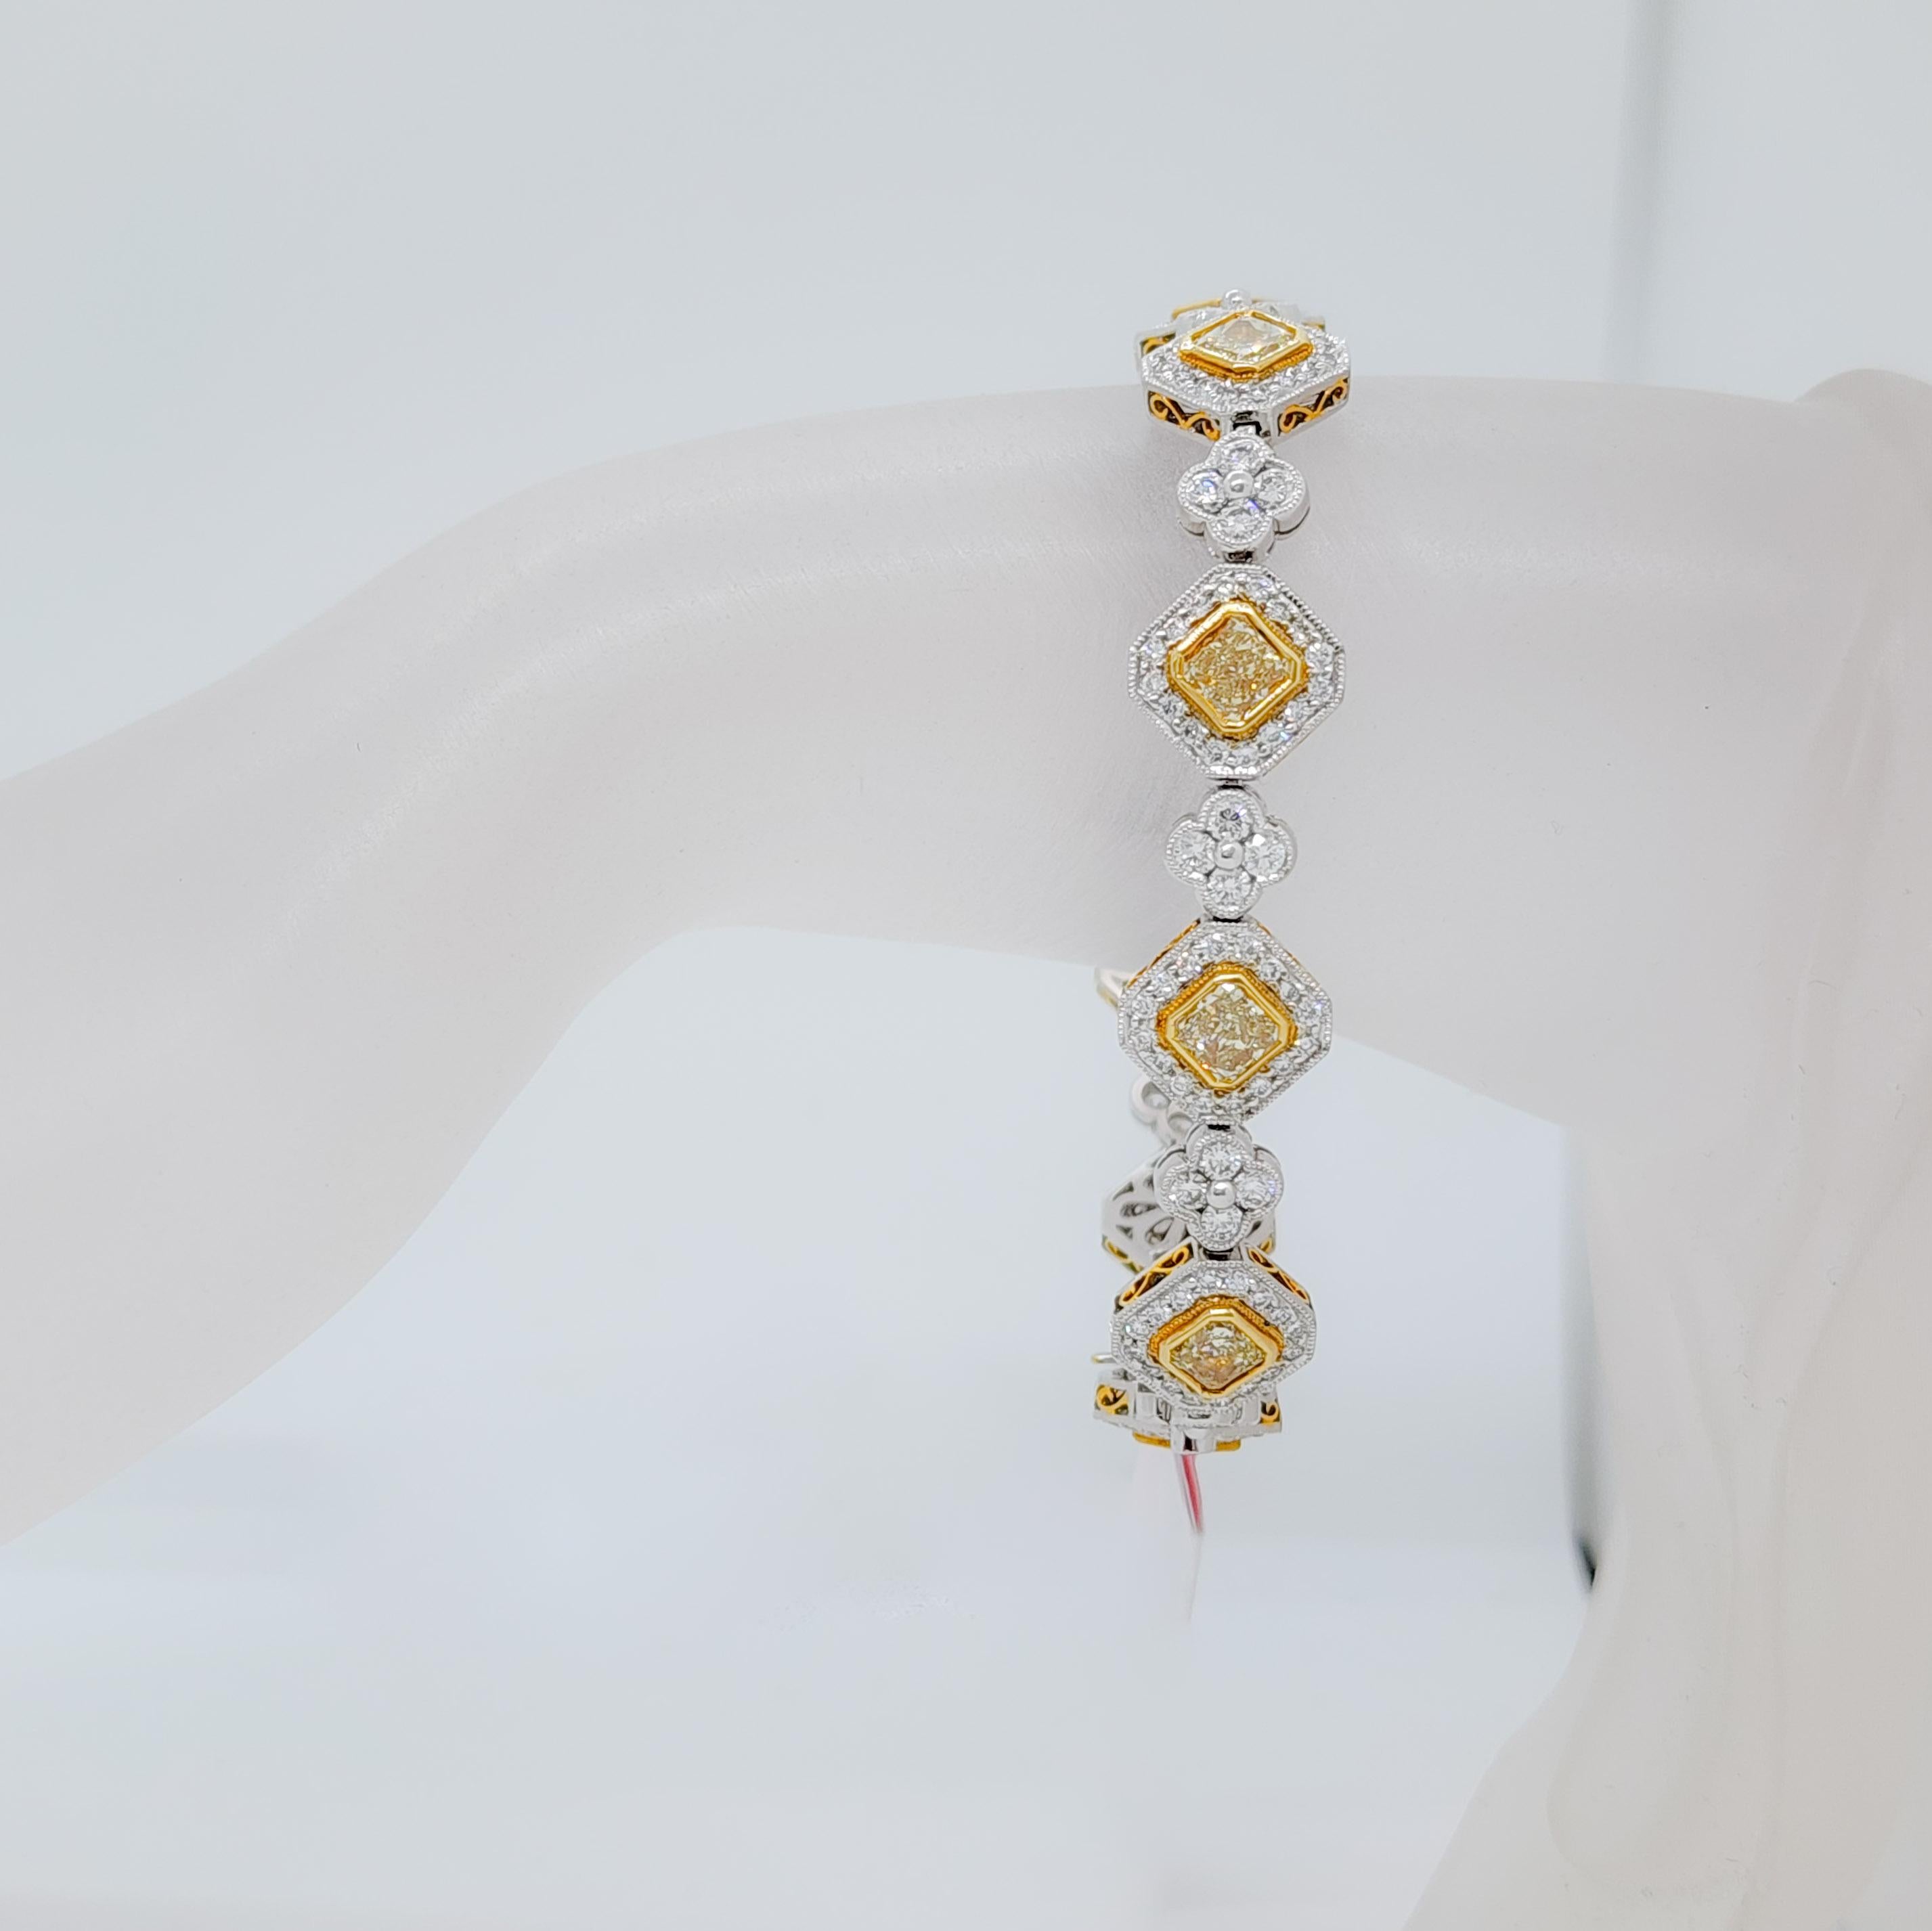 Radiant Cut Yellow Diamond and White Diamond Bracelet in 18k For Sale